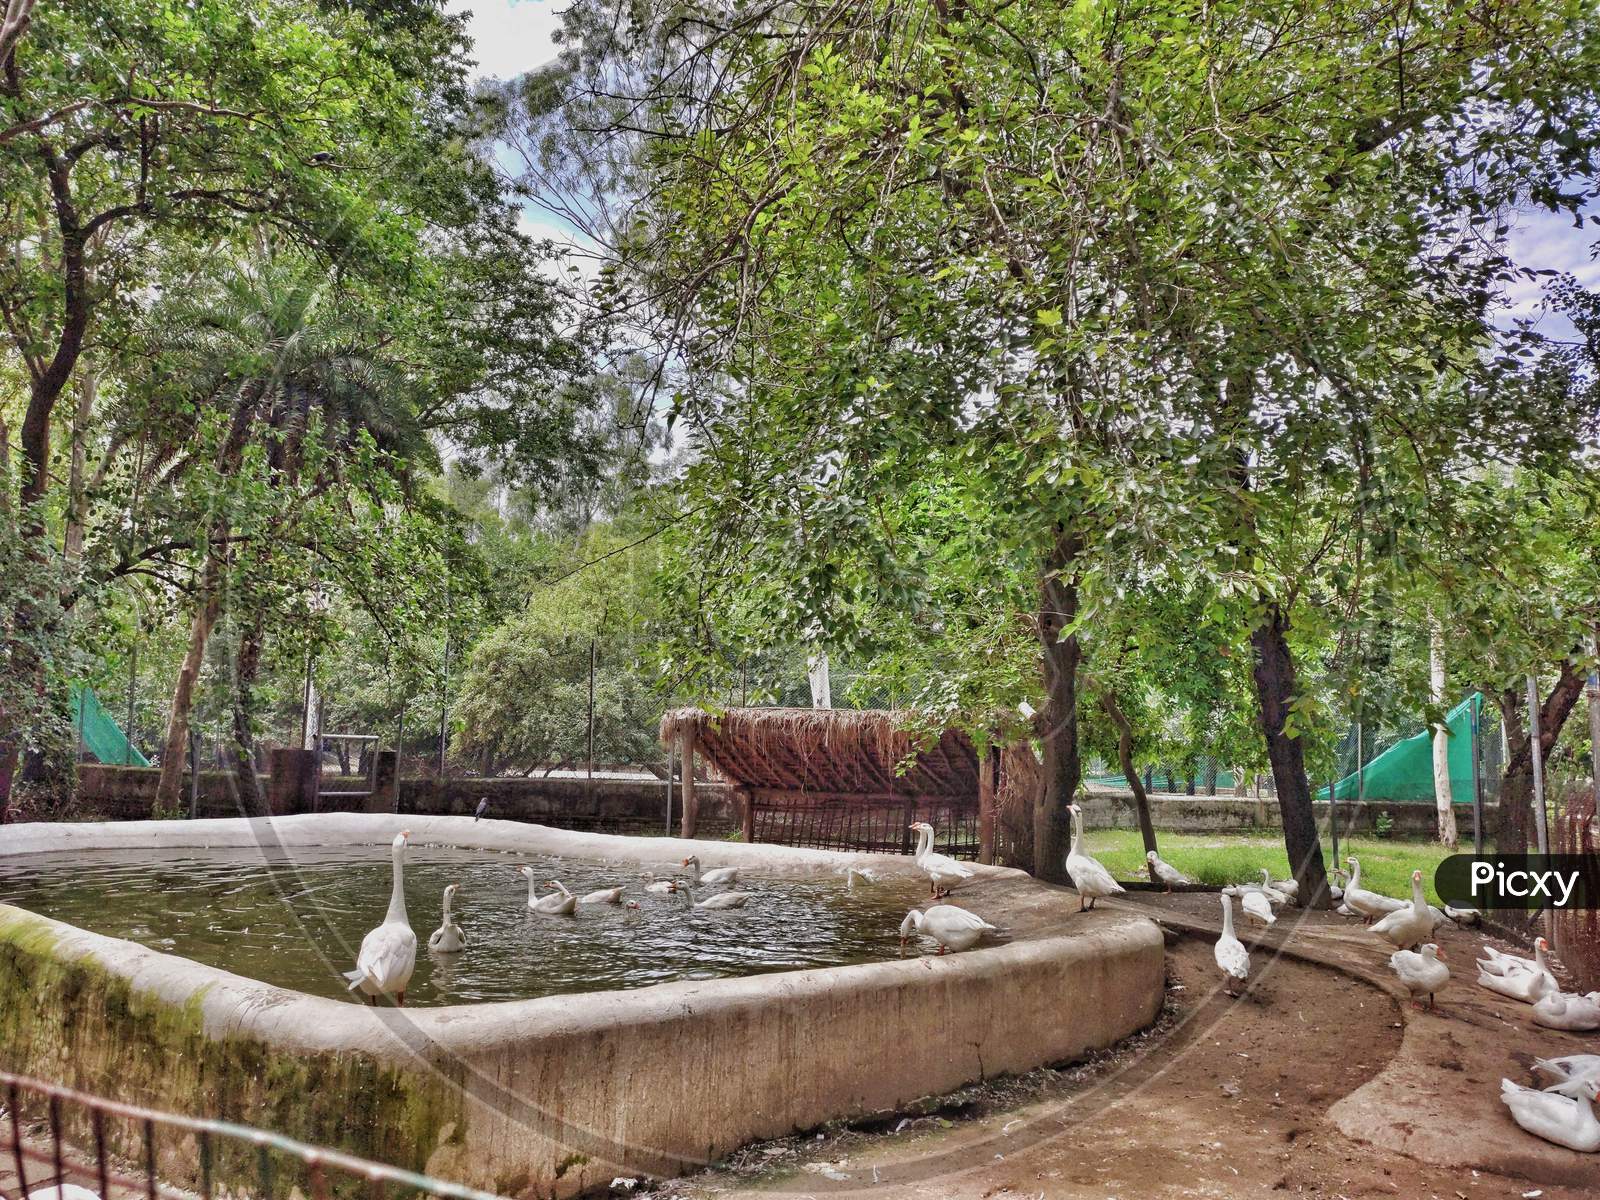 Ducks in a zoo near a pond in Punjab in india in tiger safarii zoo